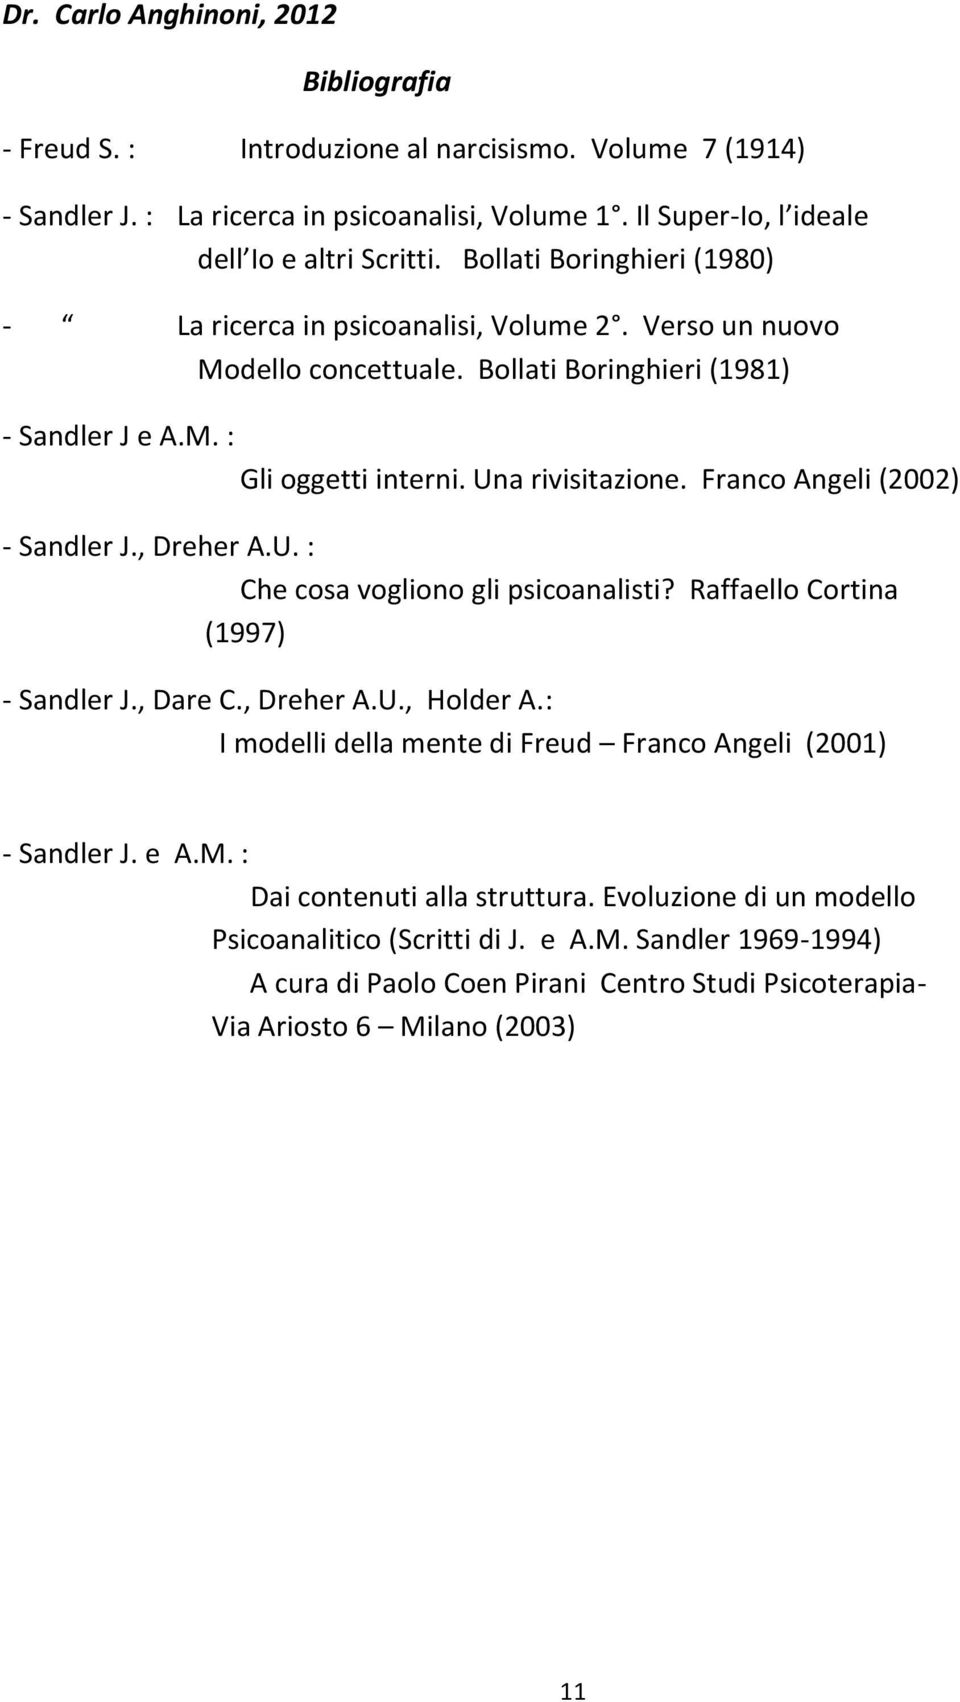 Franco Angeli (2002) - Sandler J., Dreher A.U. : Che cosa vogliono gli psicoanalisti? Raffaello Cortina (1997) - Sandler J., Dare C., Dreher A.U., Holder A.